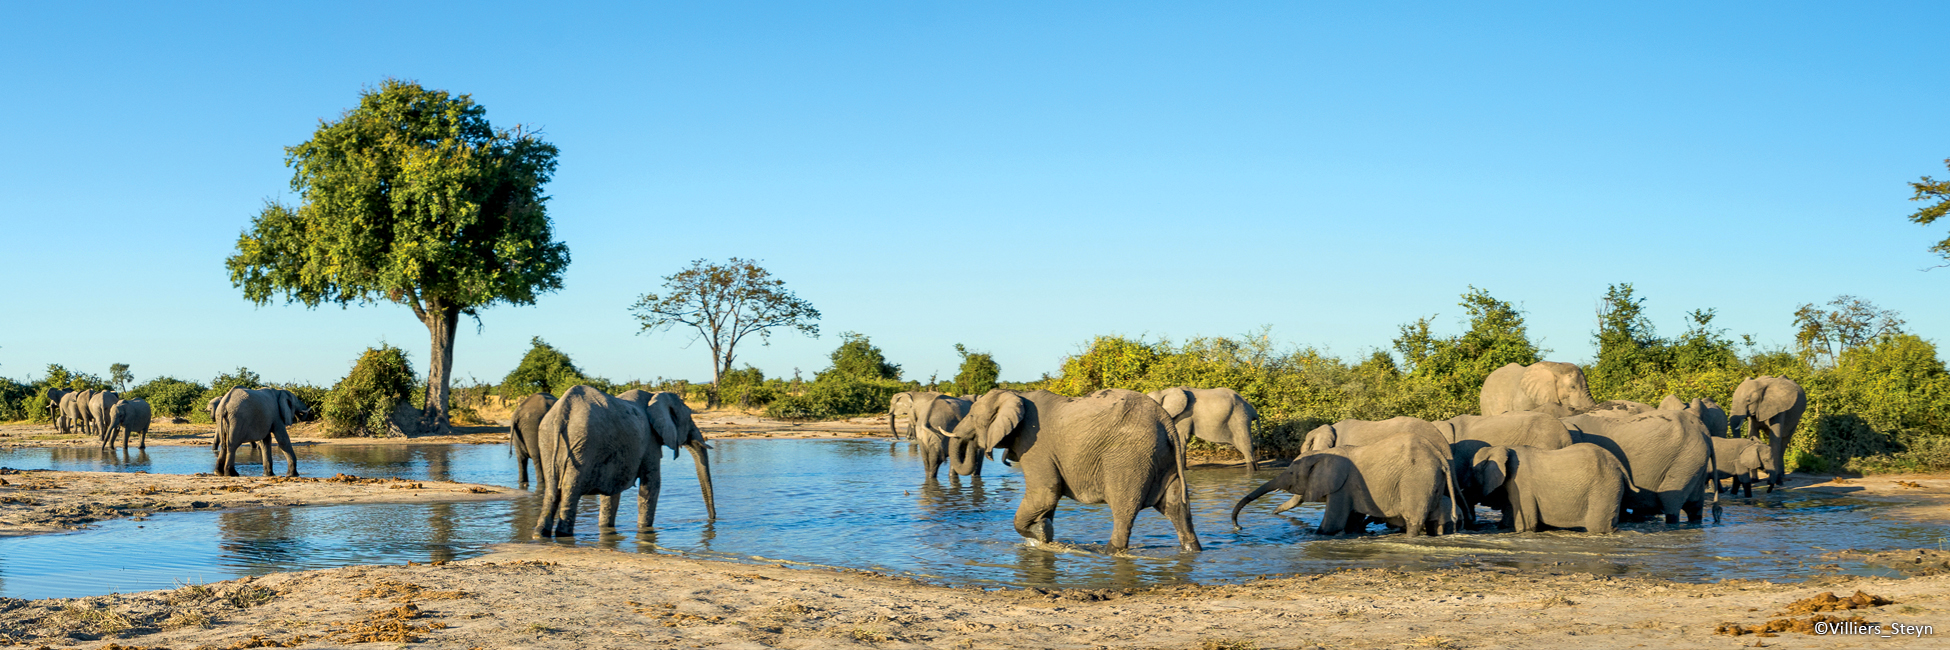 Elephants, Parc national de Chobe